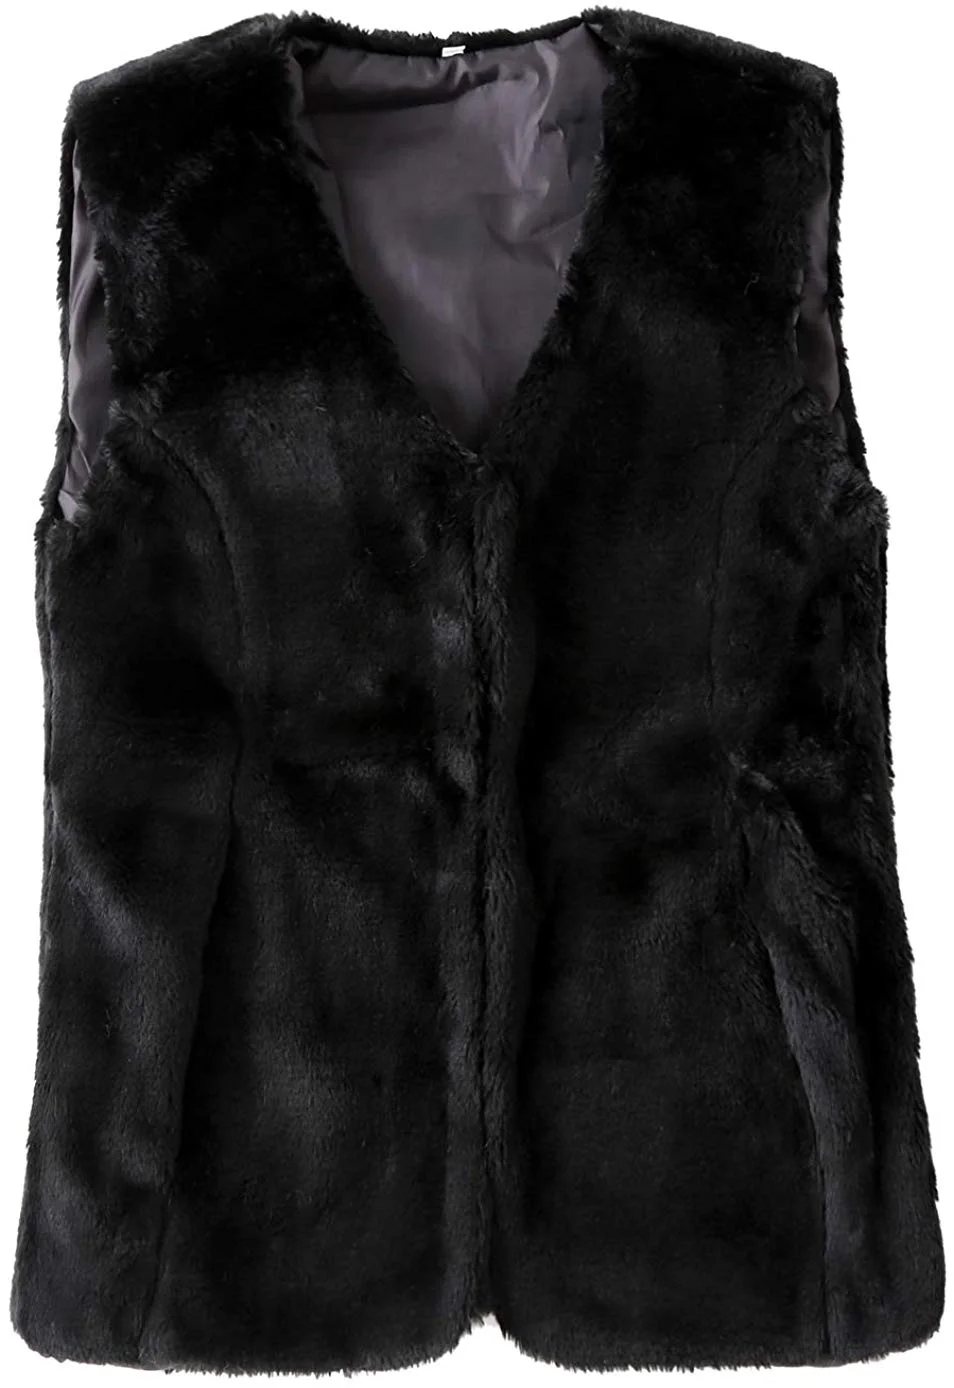 Women's Faux Fur Vest Warm Sleeveless Jacket Gilet with Pockets